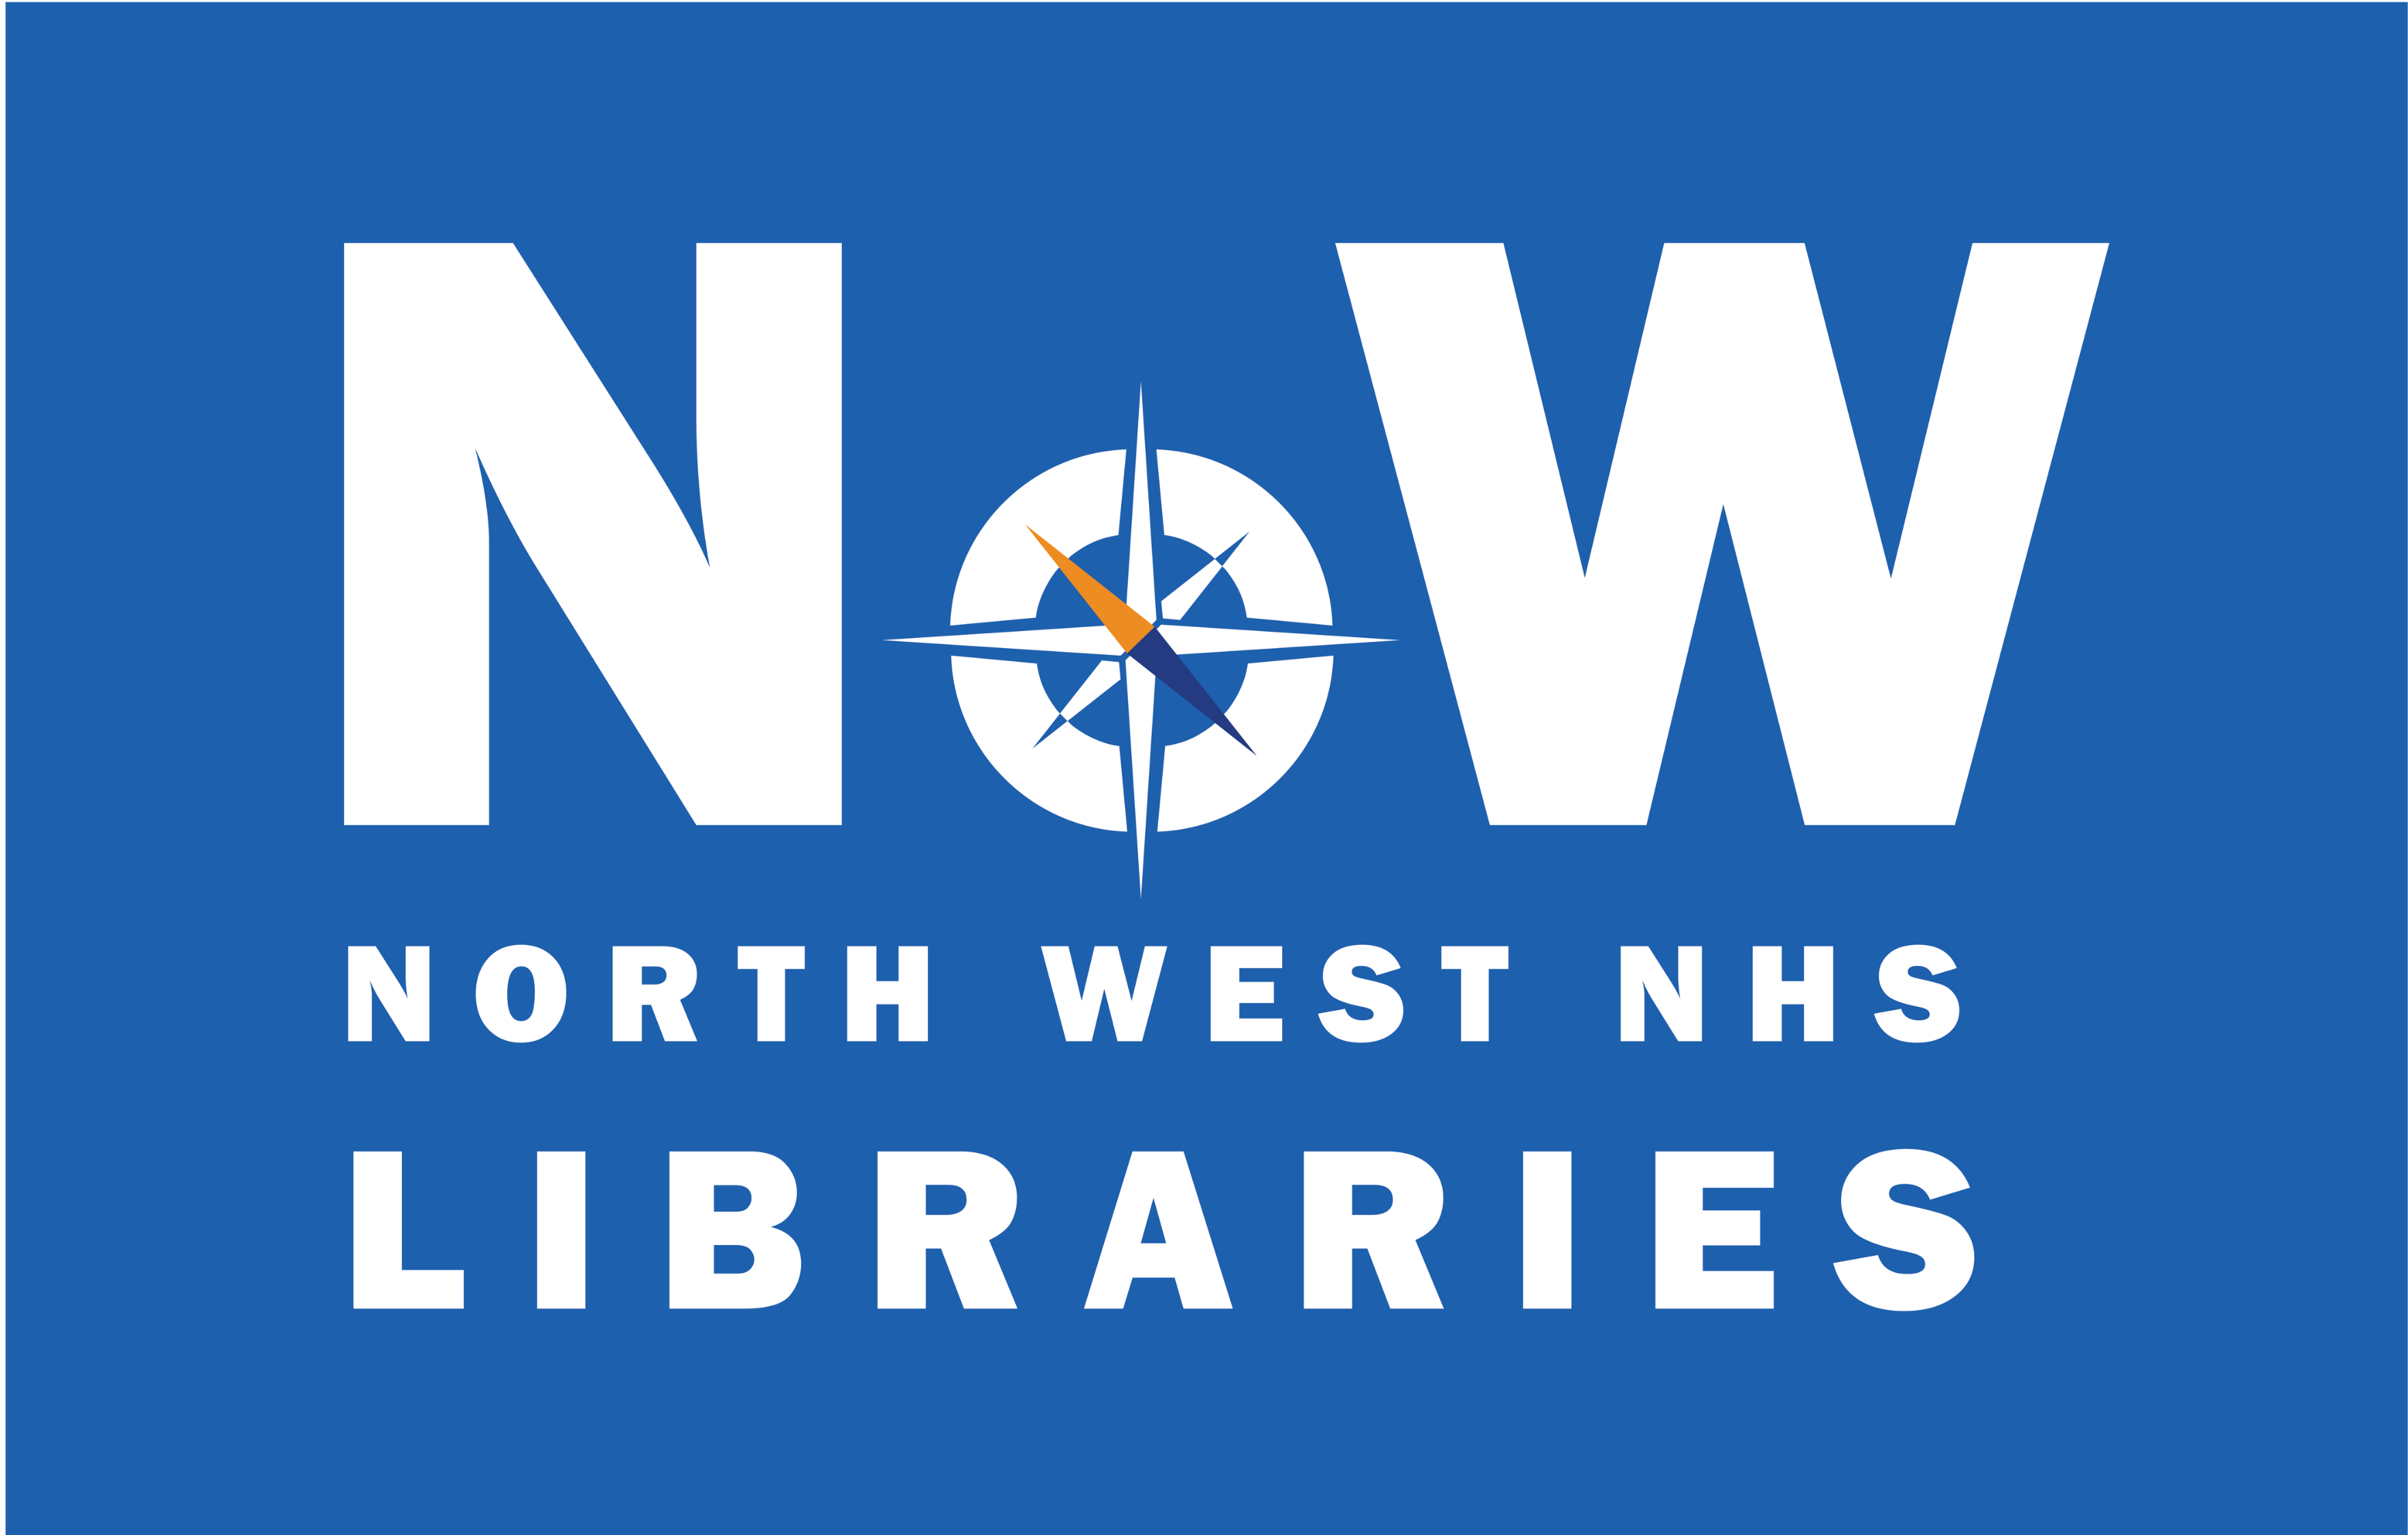 NoW NHS Libraries logo